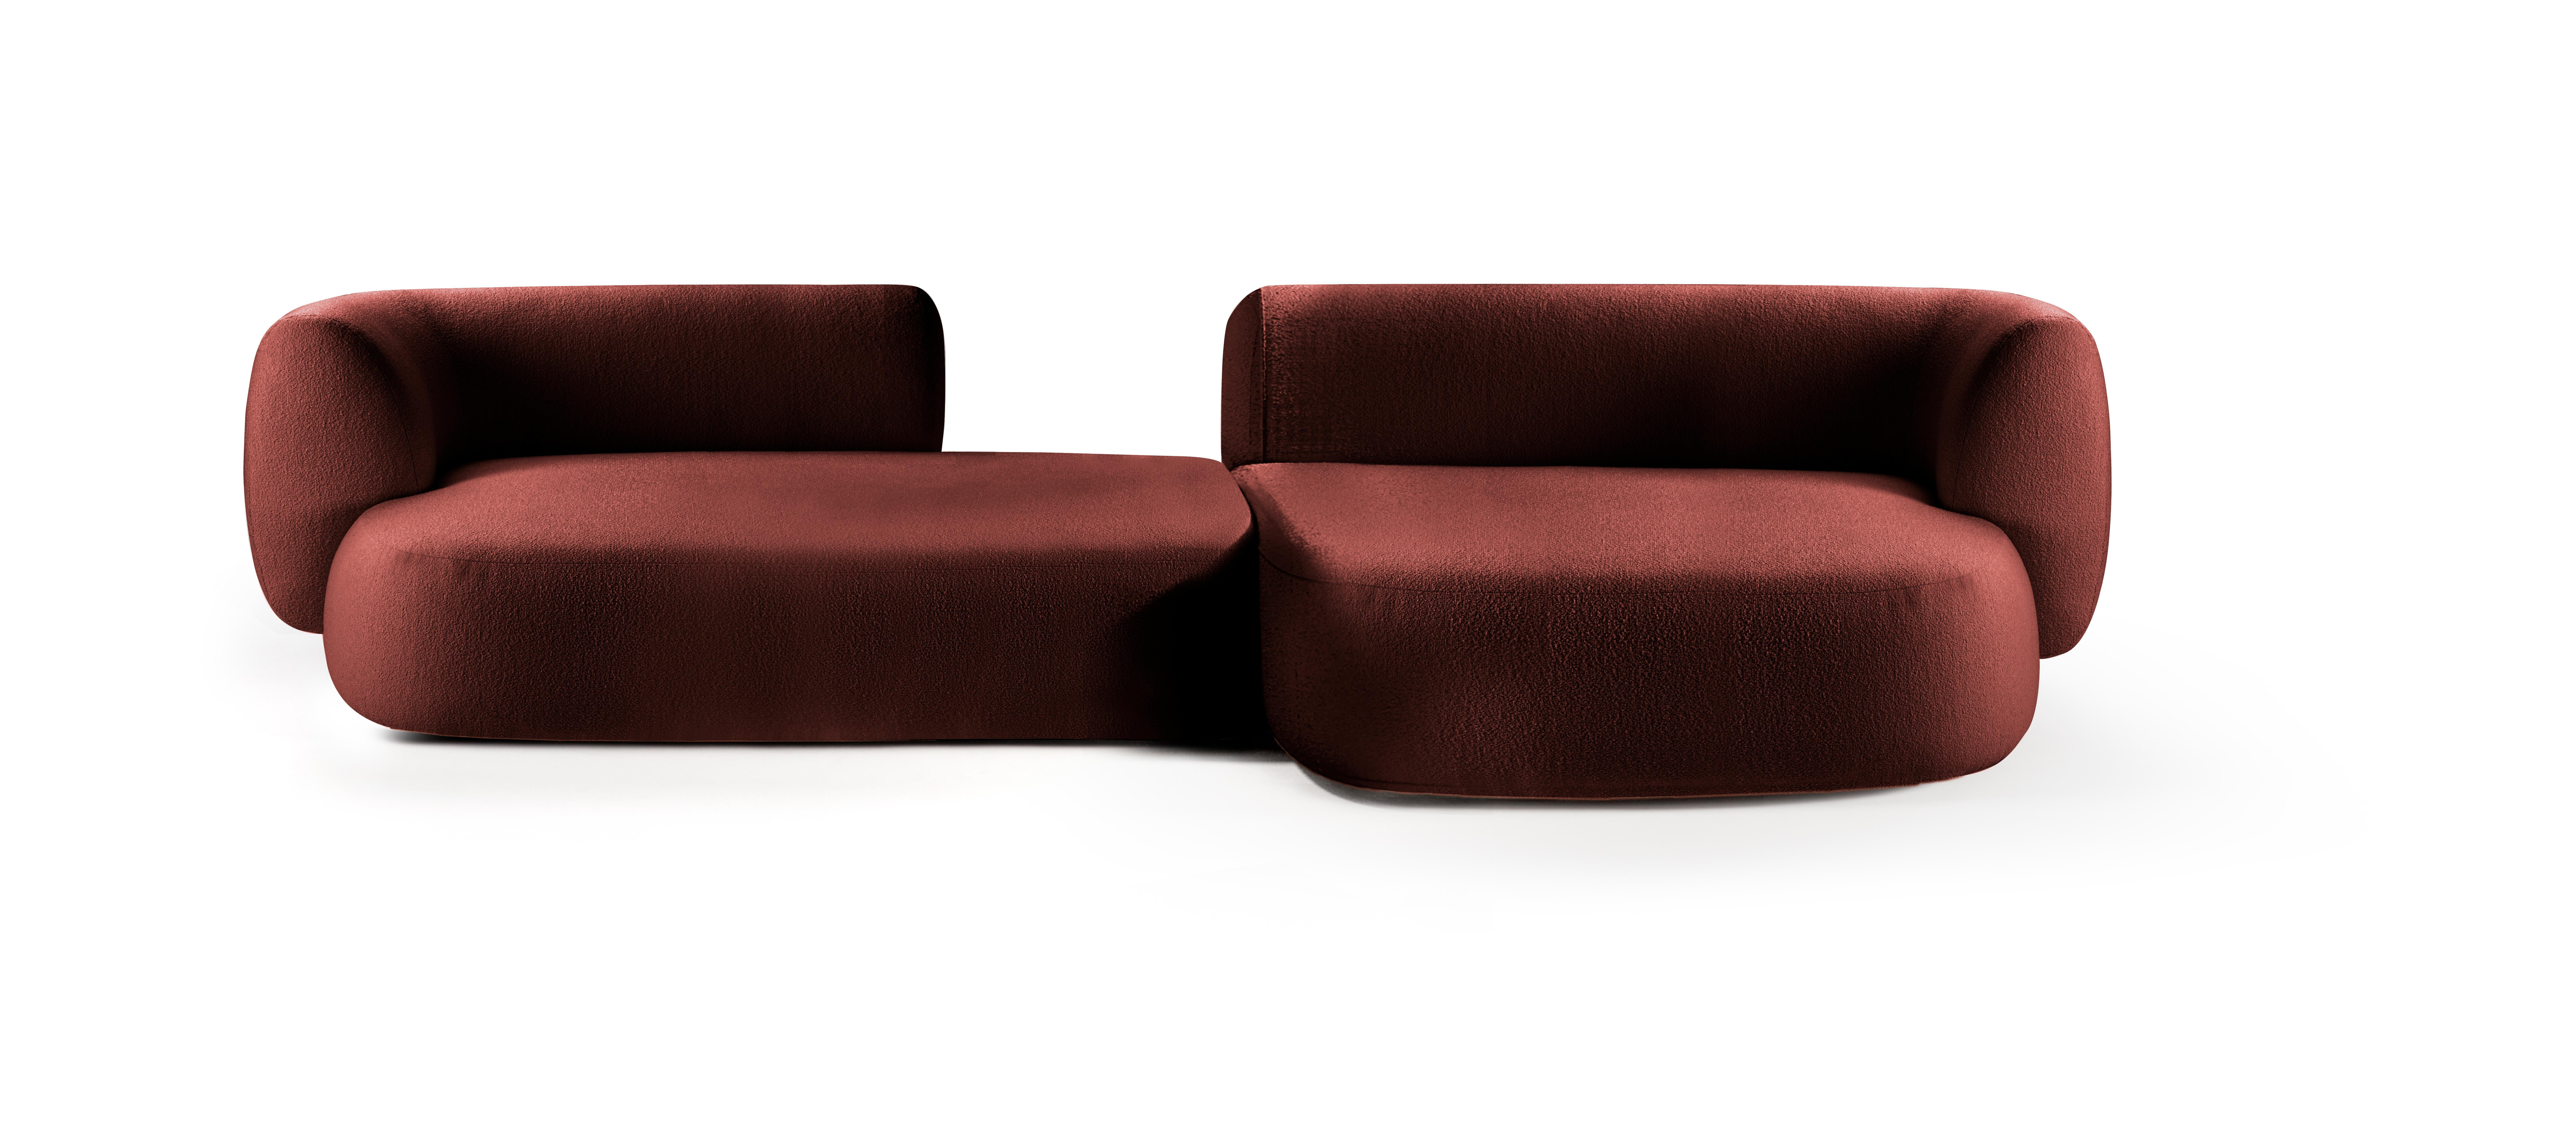 Hug modular sofa by Collector
Dimensions: W 330 x D 160 x H 74 cm.
DX Terminal Element Gap module: W 180 x D 98 cm x H 74.
Chaise Longue XL module: W 150 x D 160 x H 74 cm.
Materials: Fabric, solid oak wood.

This sofa is composed of one DX